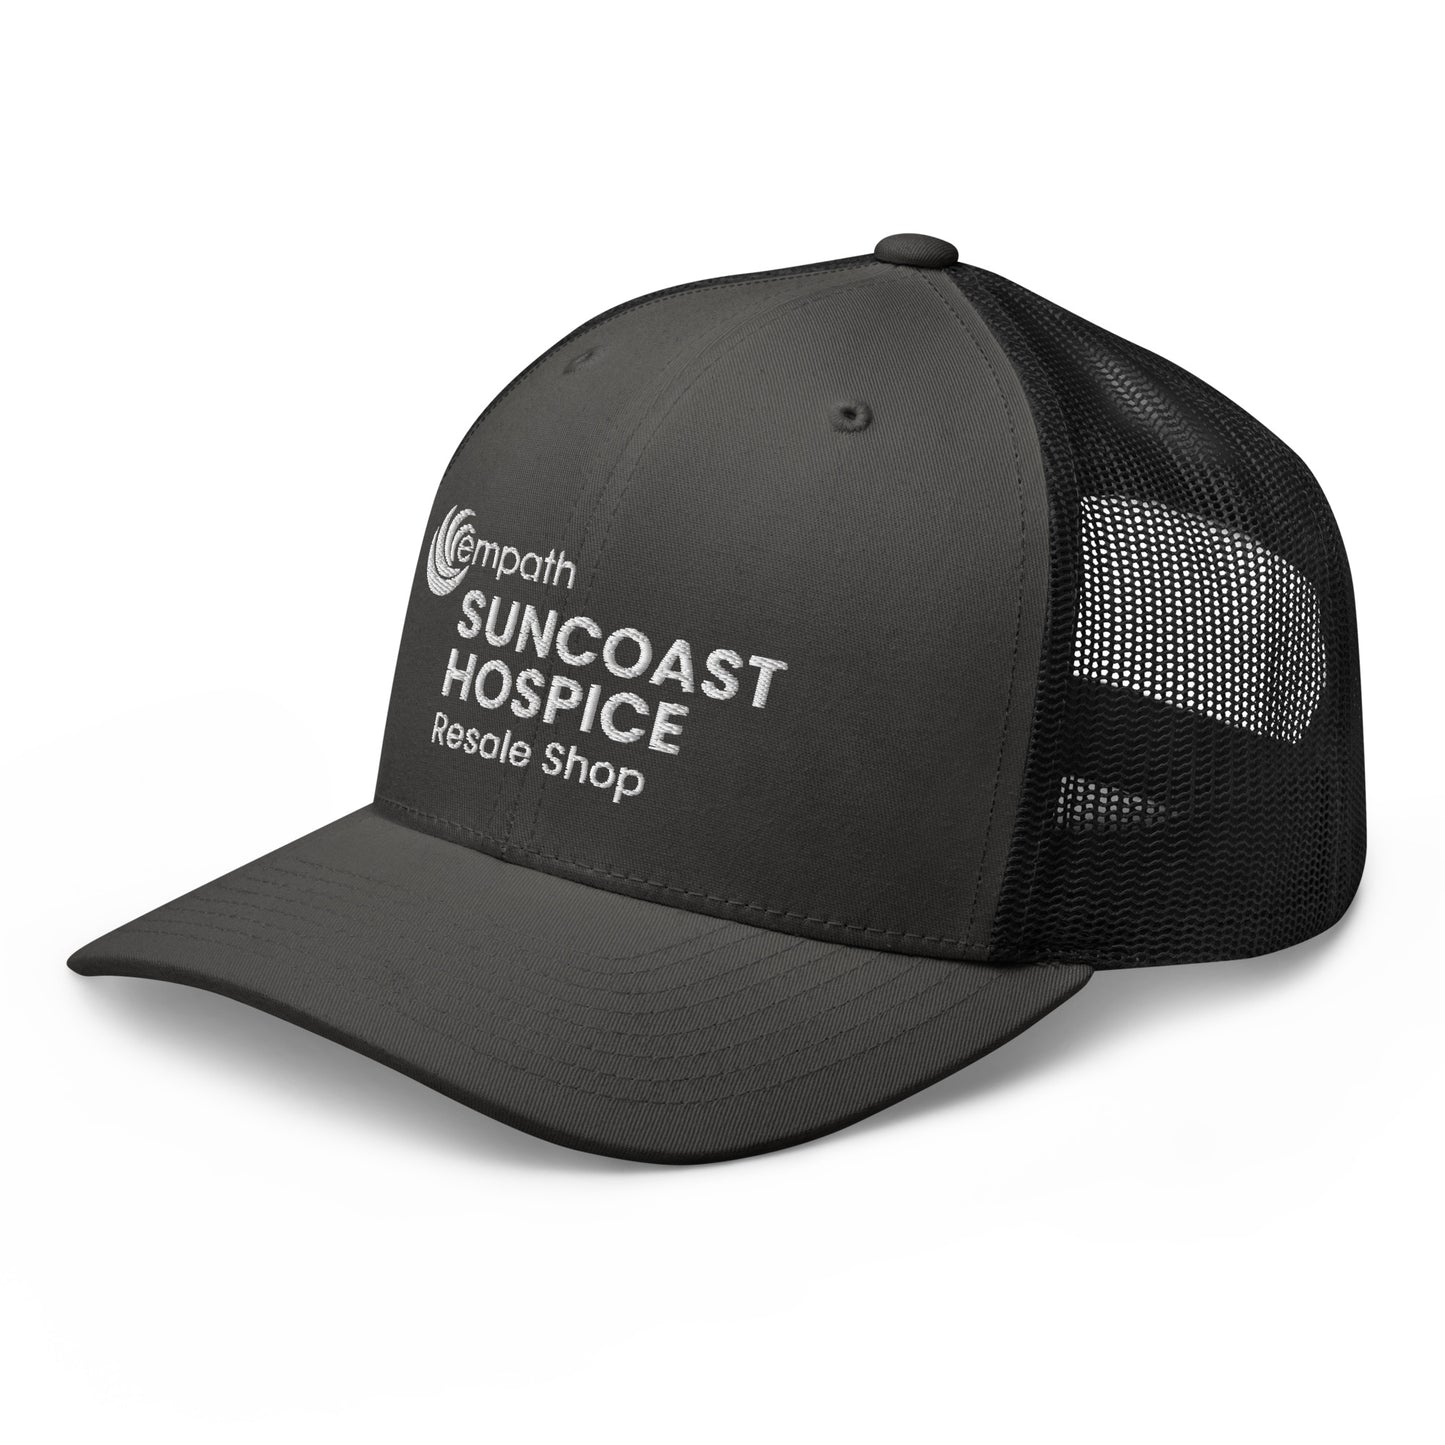 Trucker Cap - Suncoast Hospice Resale Shop